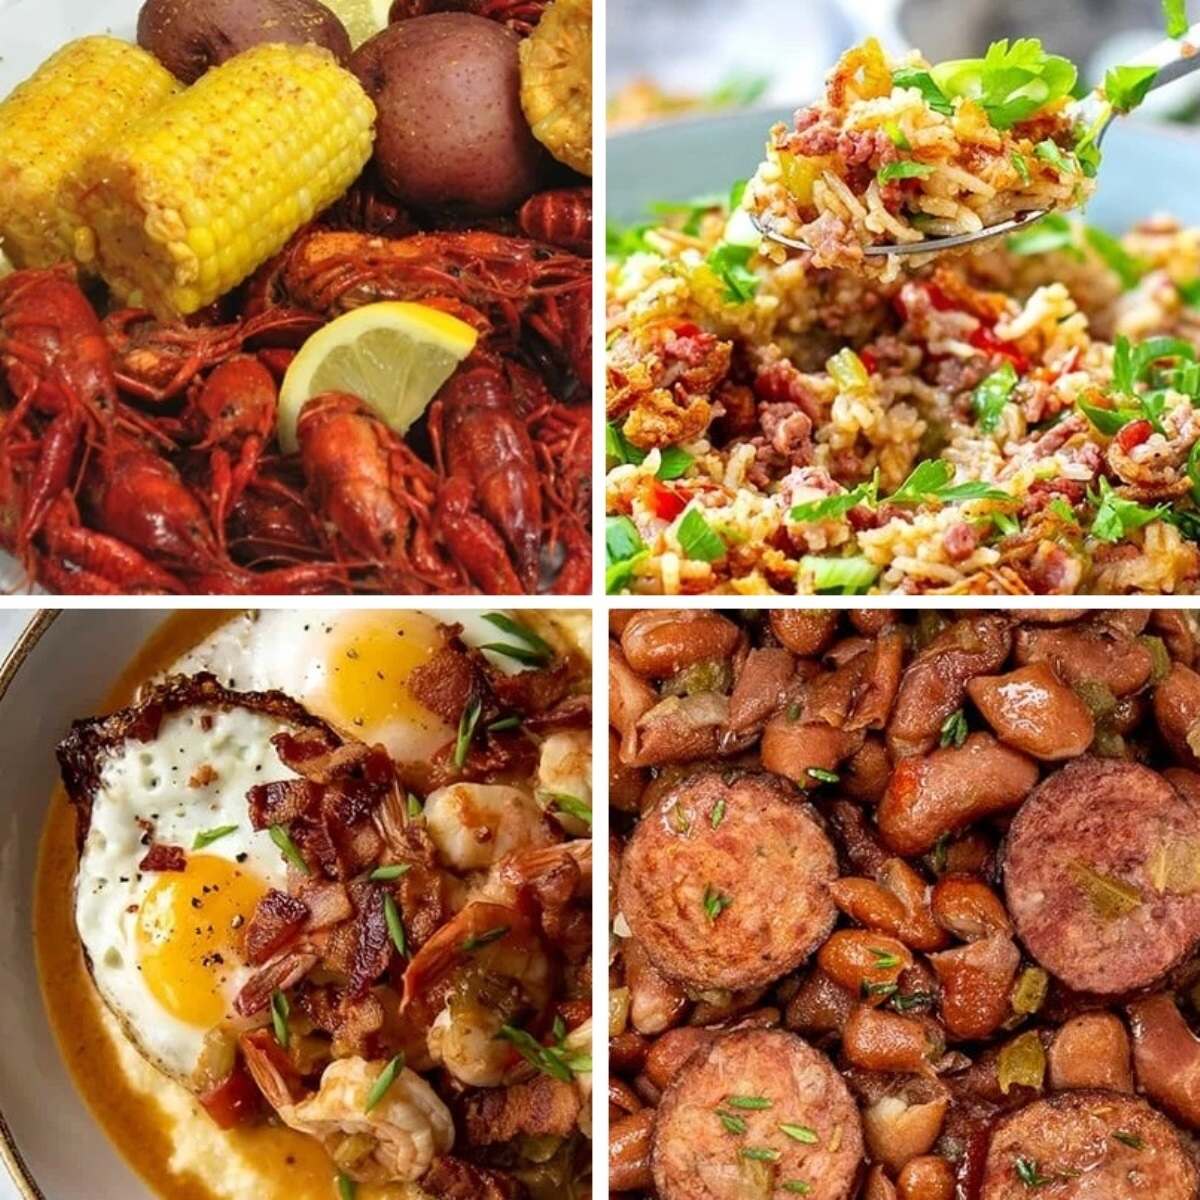 https://instantpoteats.com/wp-content/uploads/2021/03/Instant-Pot-Cajun-and-Creole-Recipes-feature.jpg